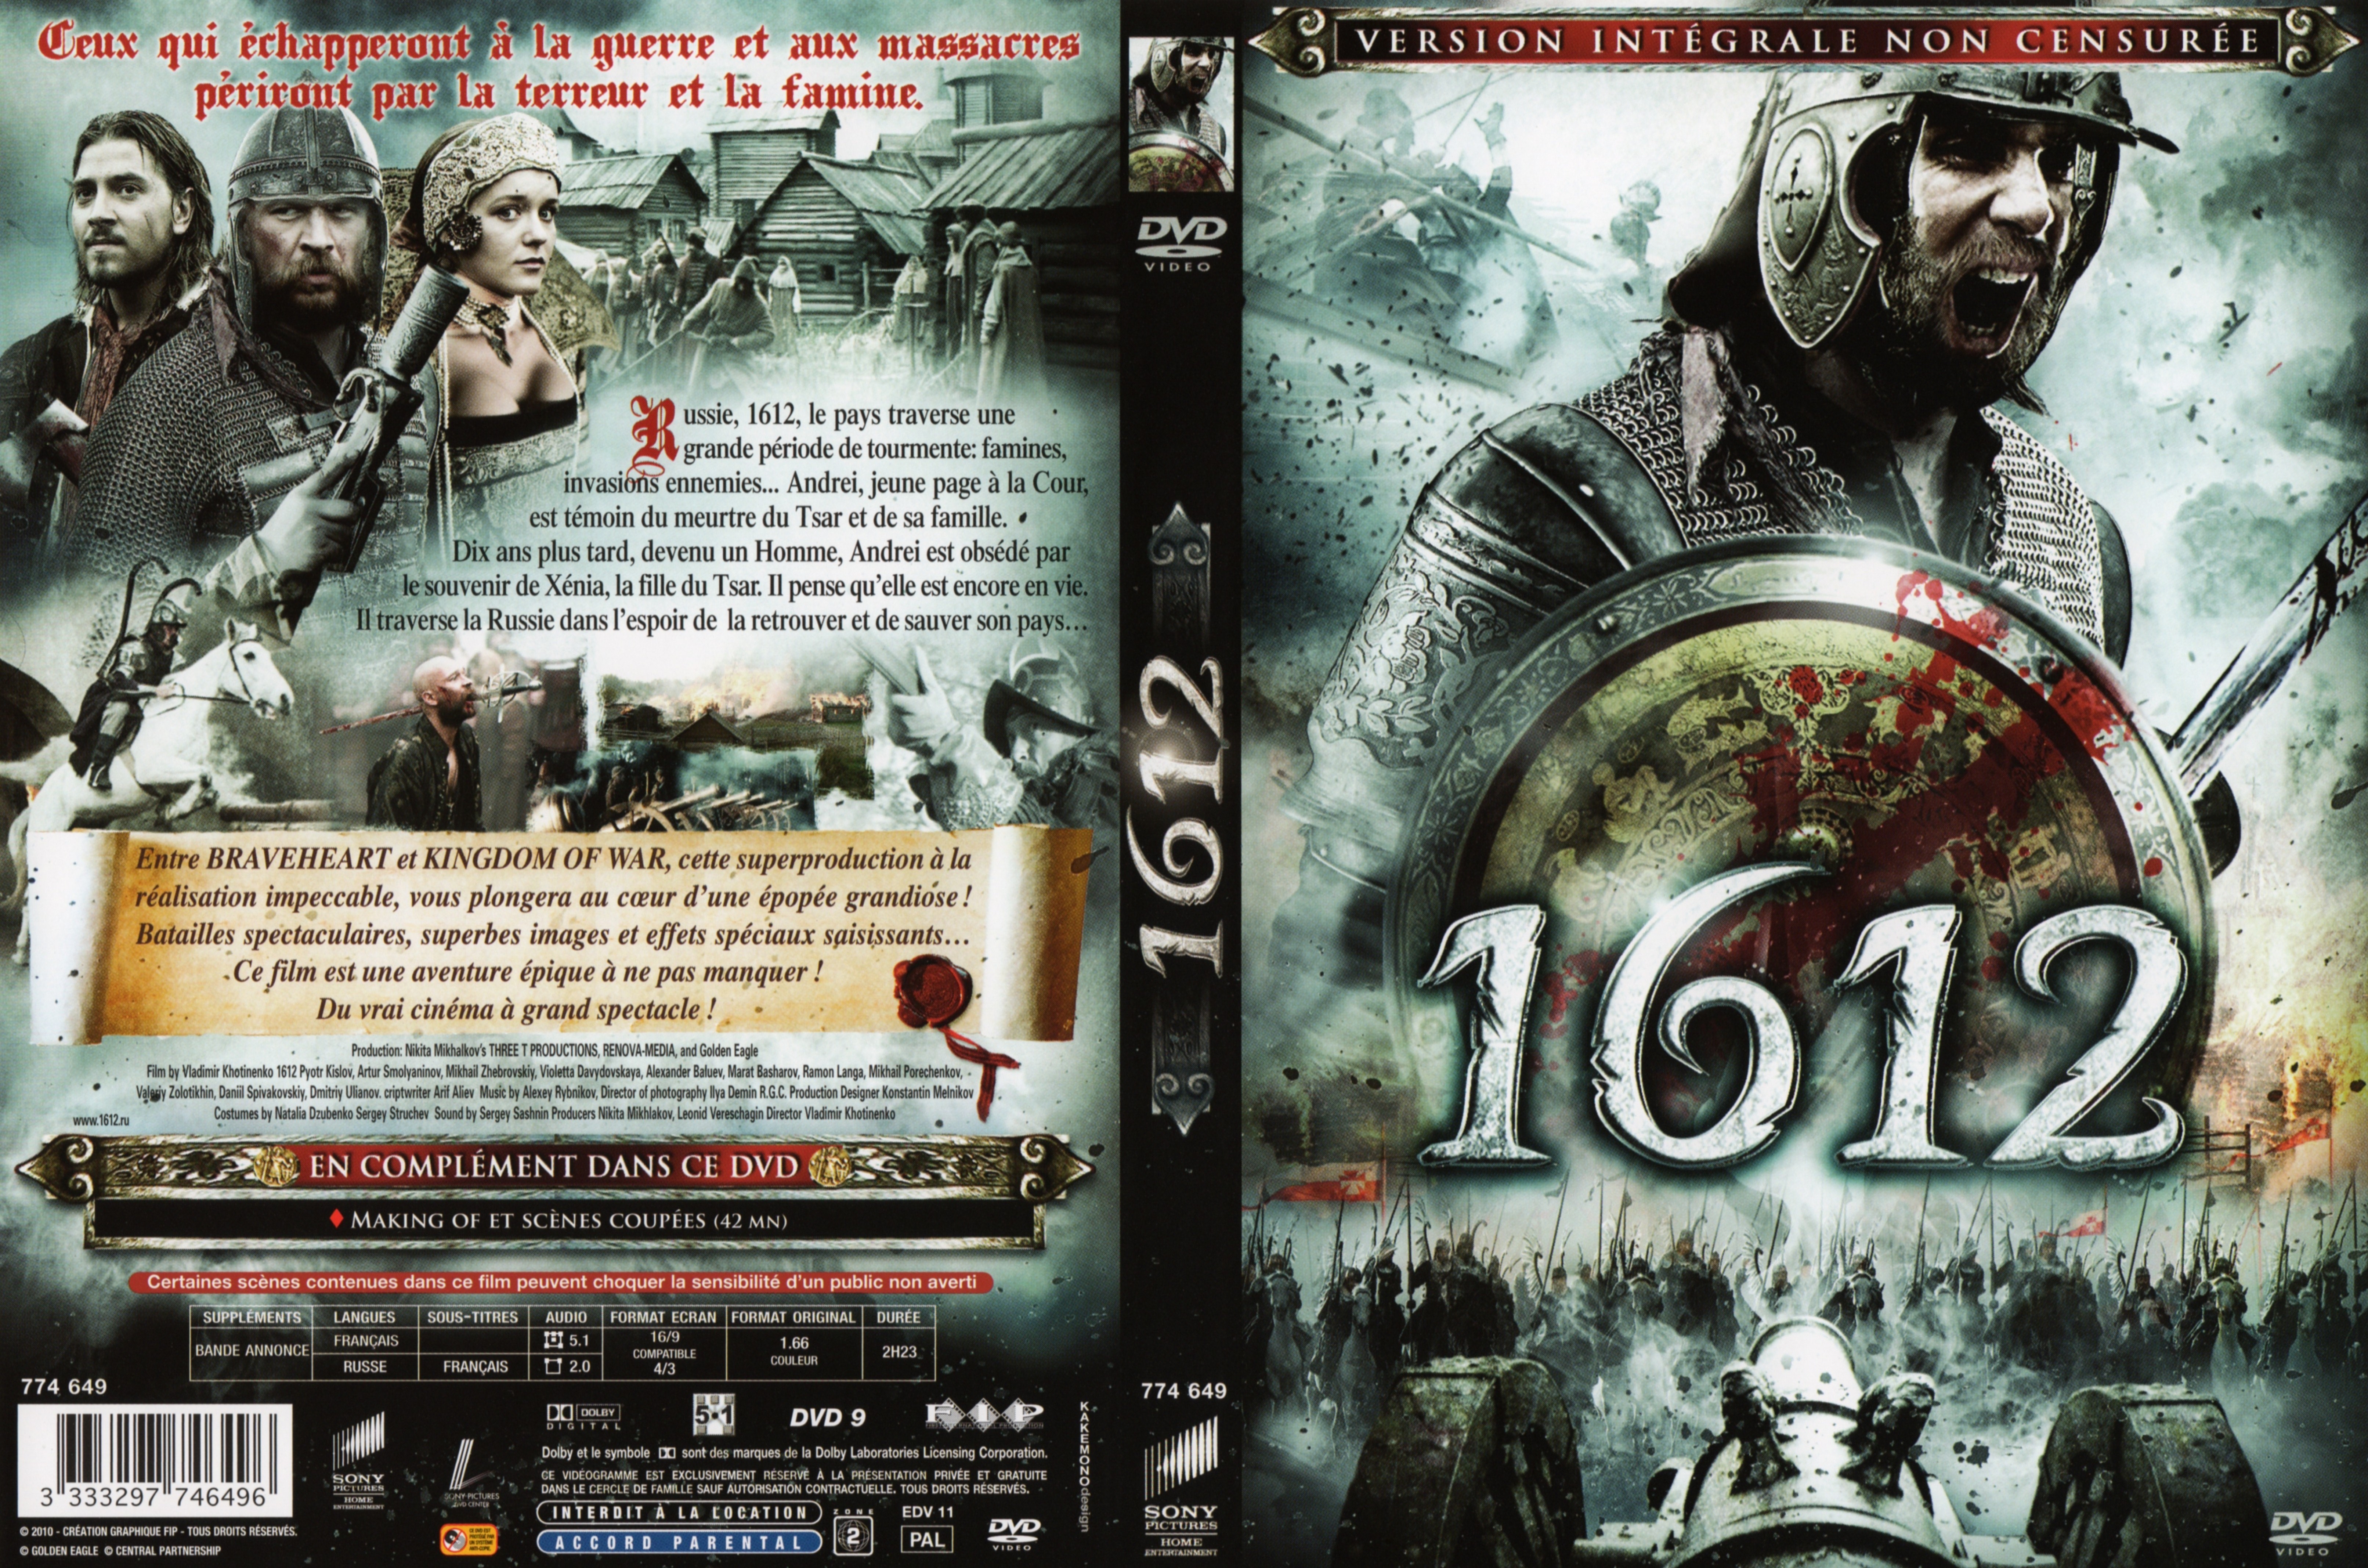 Jaquette DVD 1612